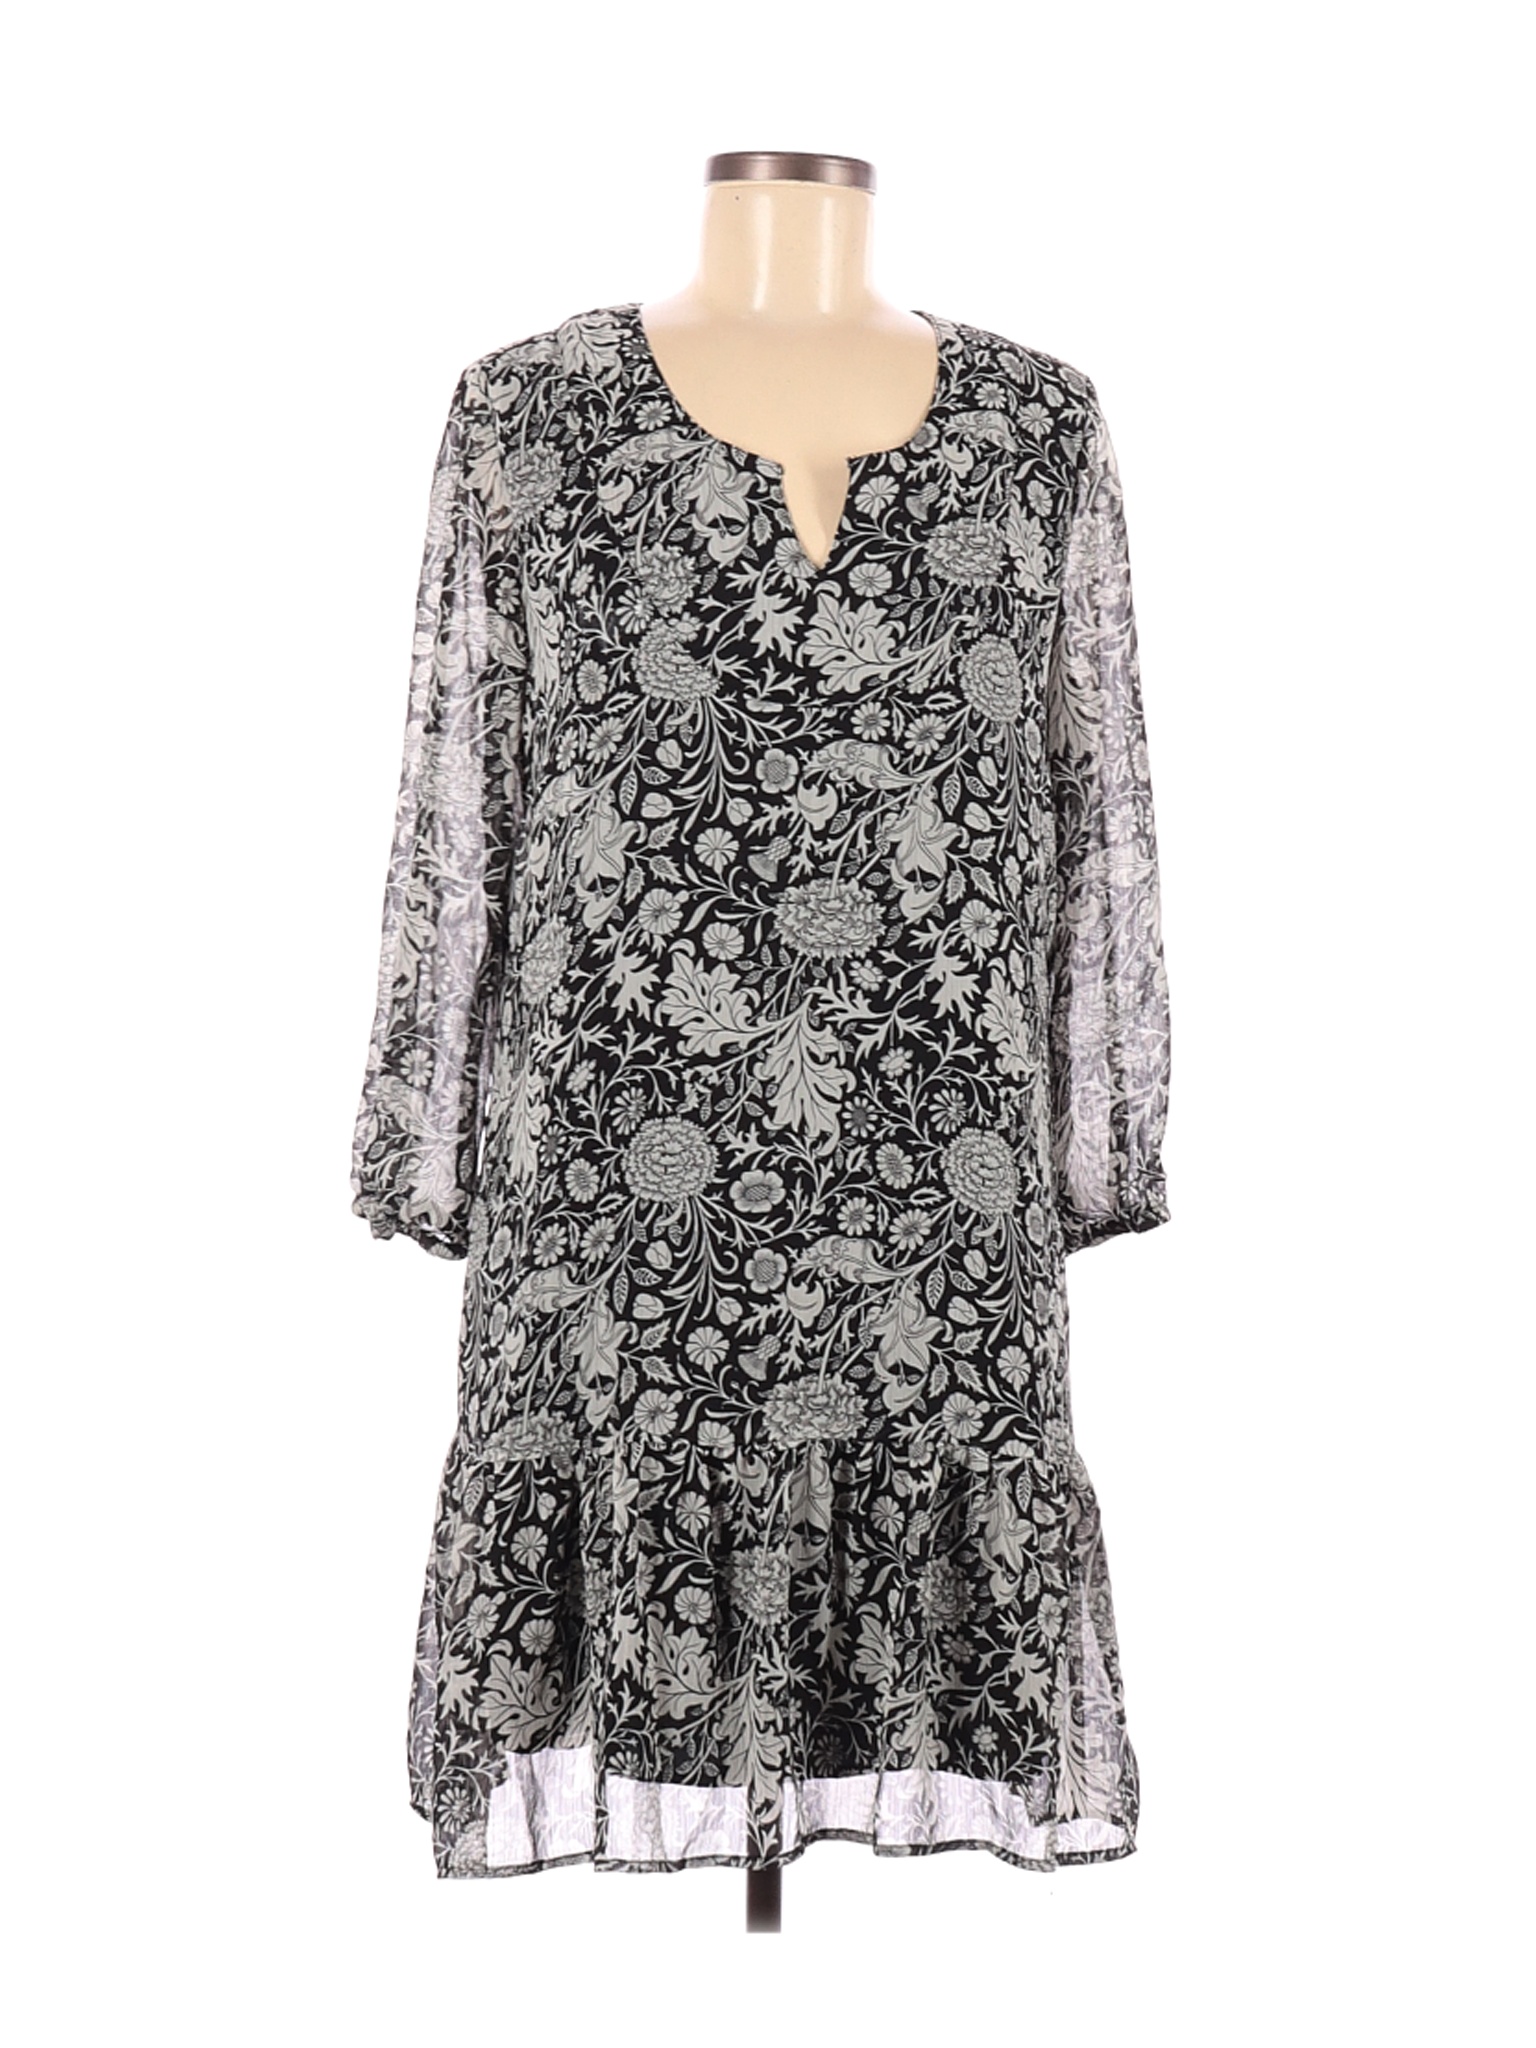 Rose + Olive 100% Polyester Floral Black Casual Dress Size M - 63% off ...